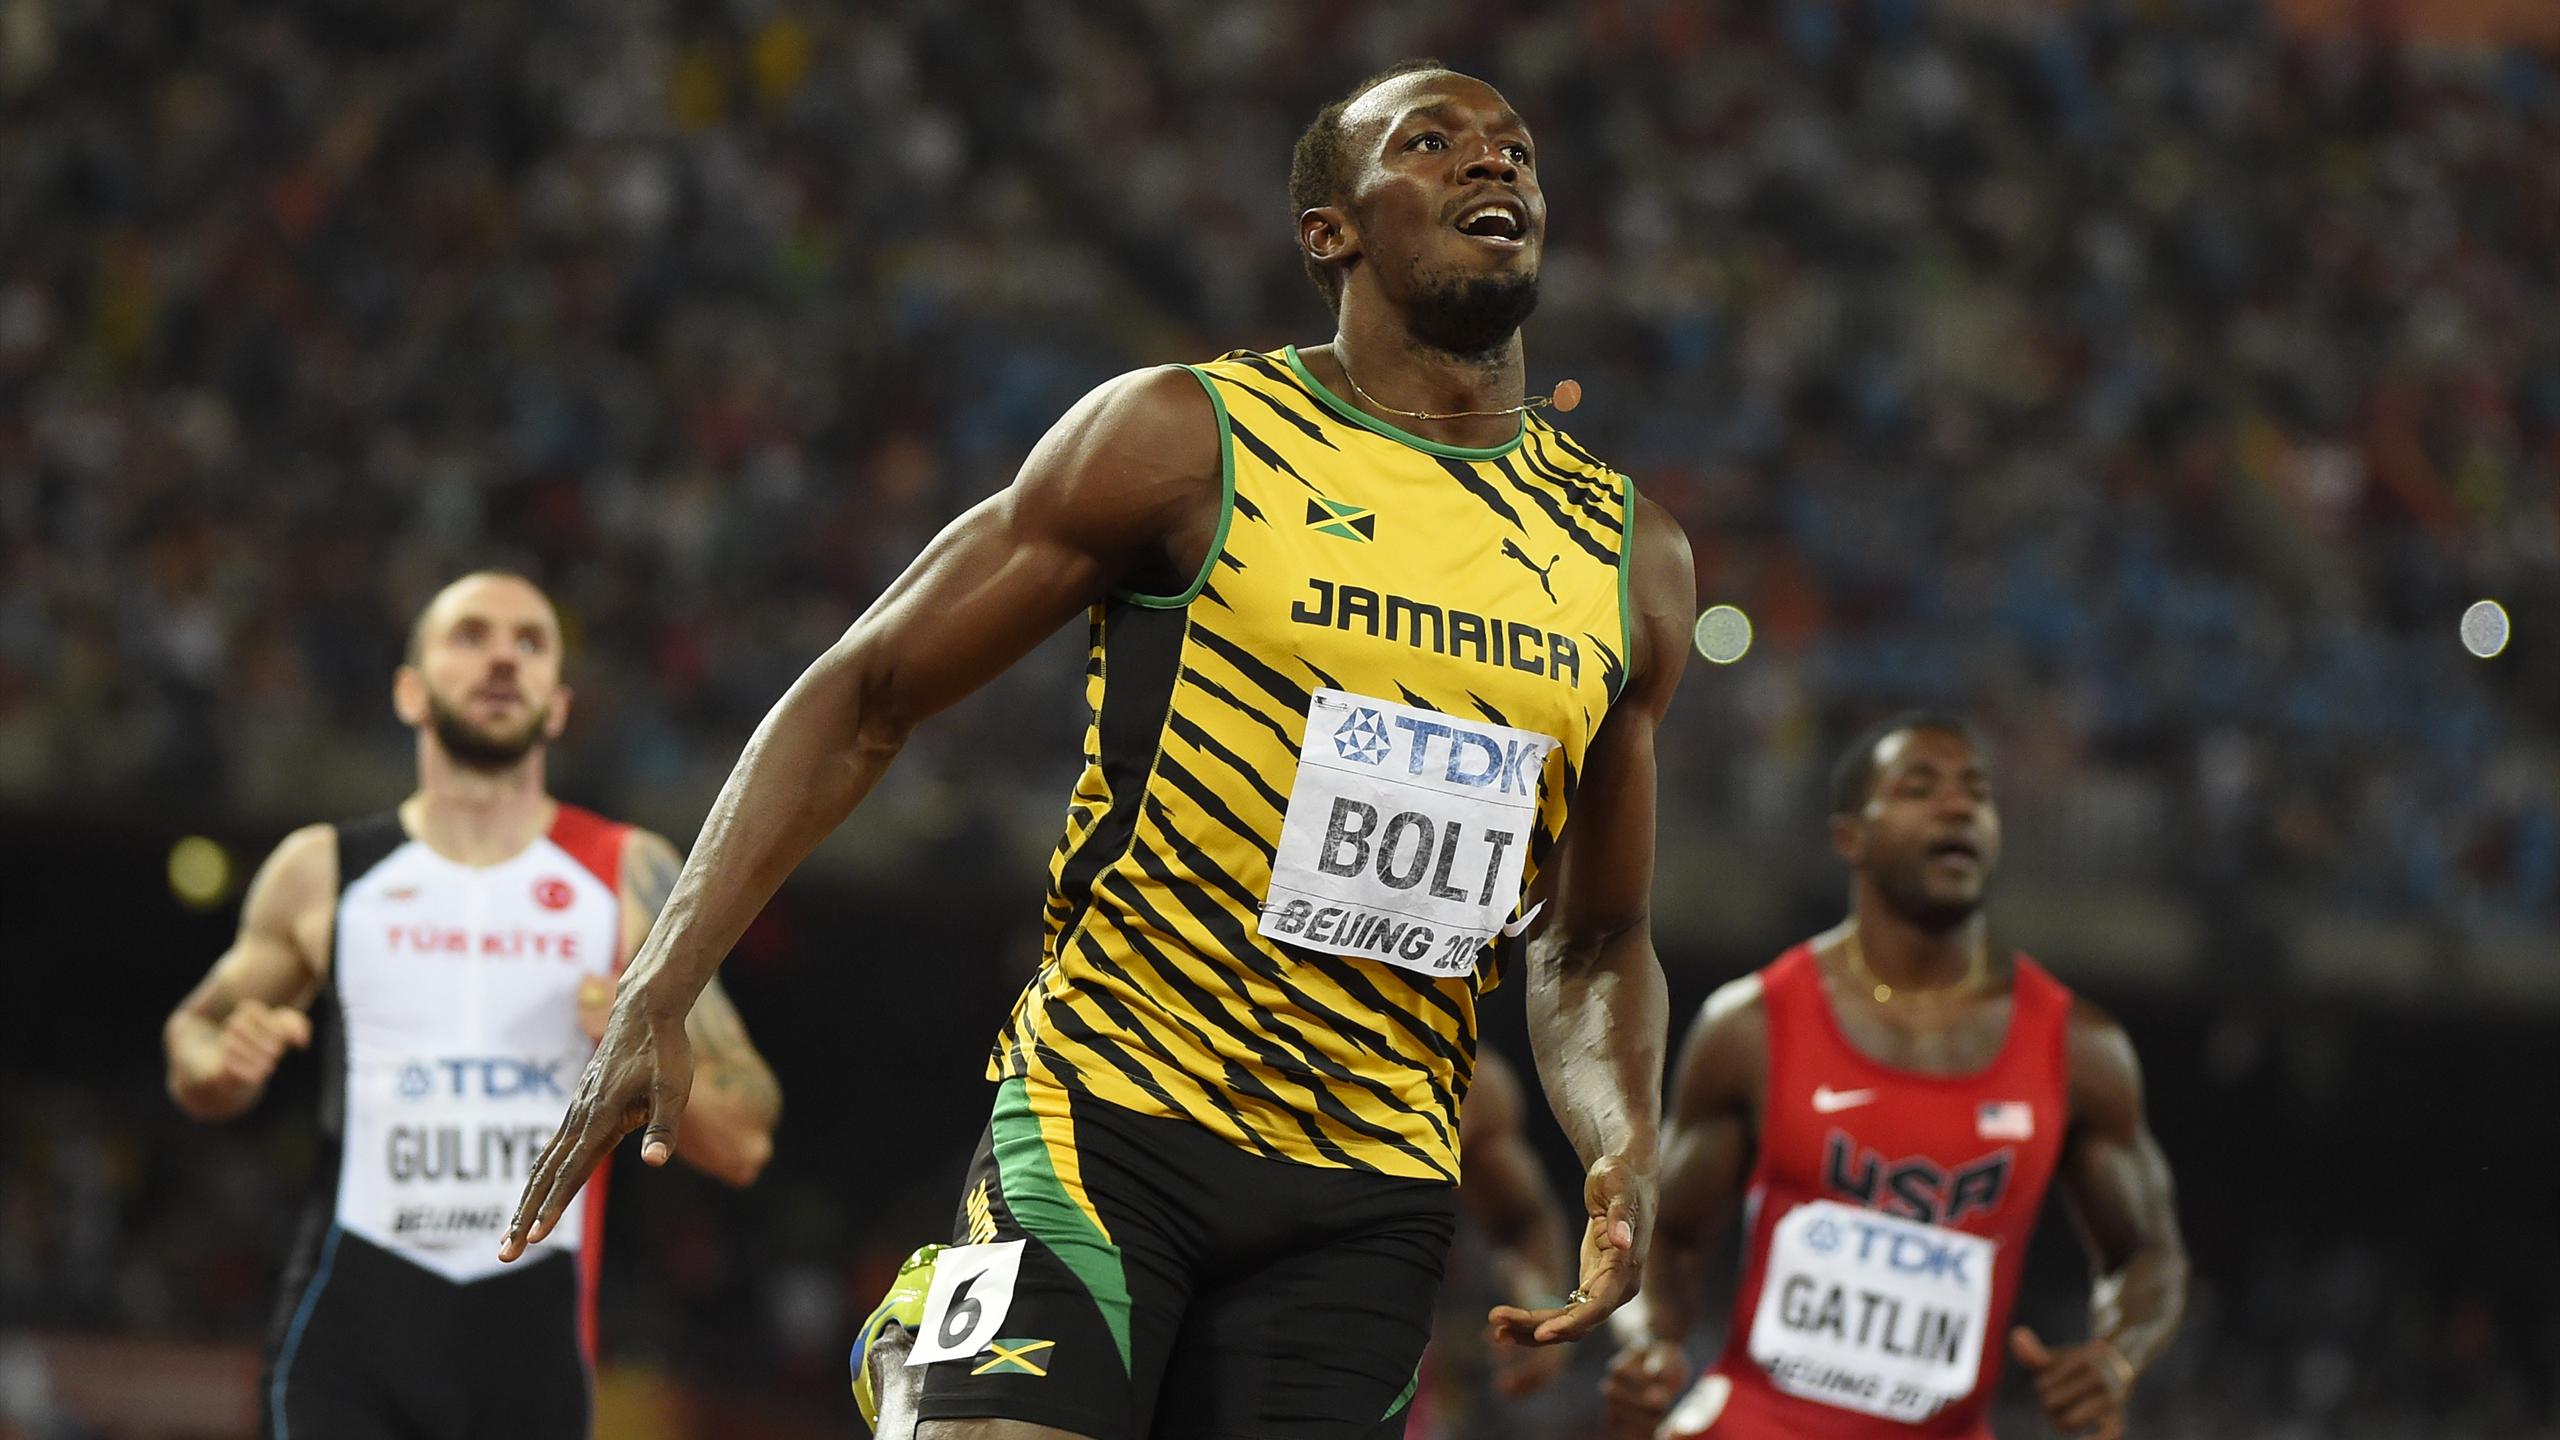 Ямайский бегун рекордсмен. Усейн болт 200 метров. Усейн болт 100 метров. Усейн болт бег 100 метров.